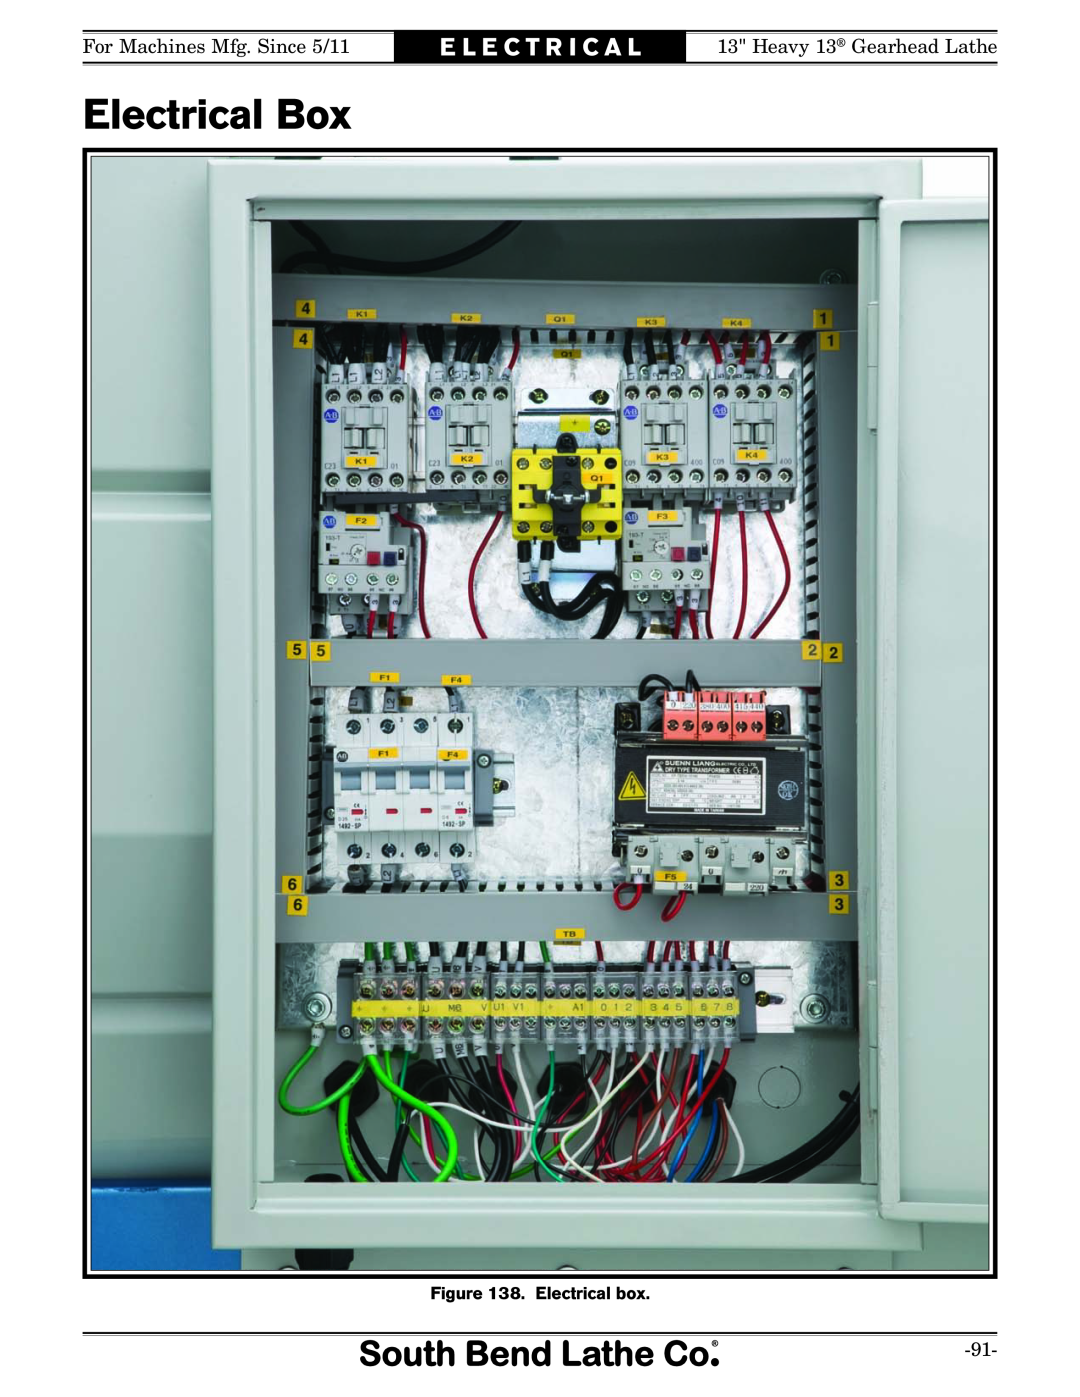 Southbend SB owner manual Electrical Box, E L E C T R I C A L, Electrical box 